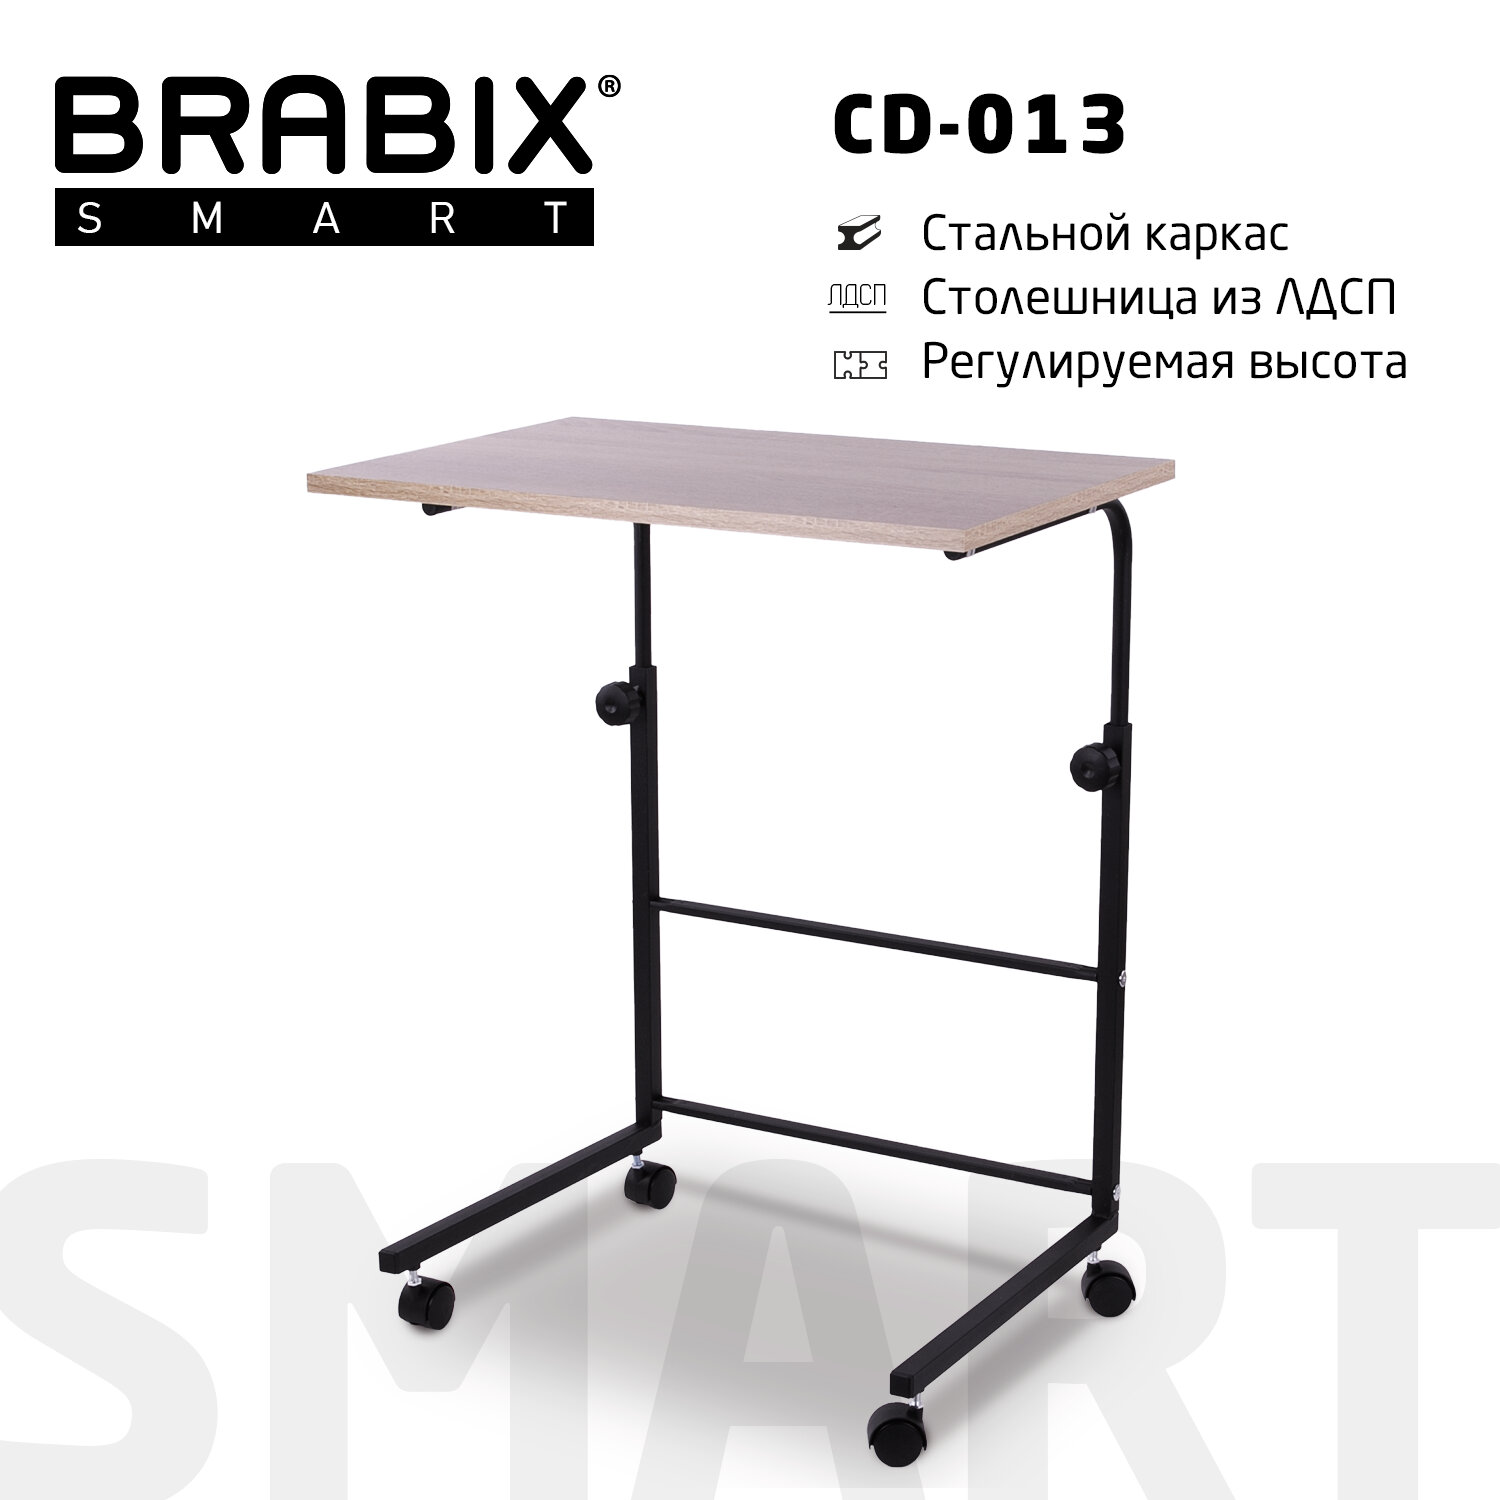  BRABIX Smart CD-013 641882